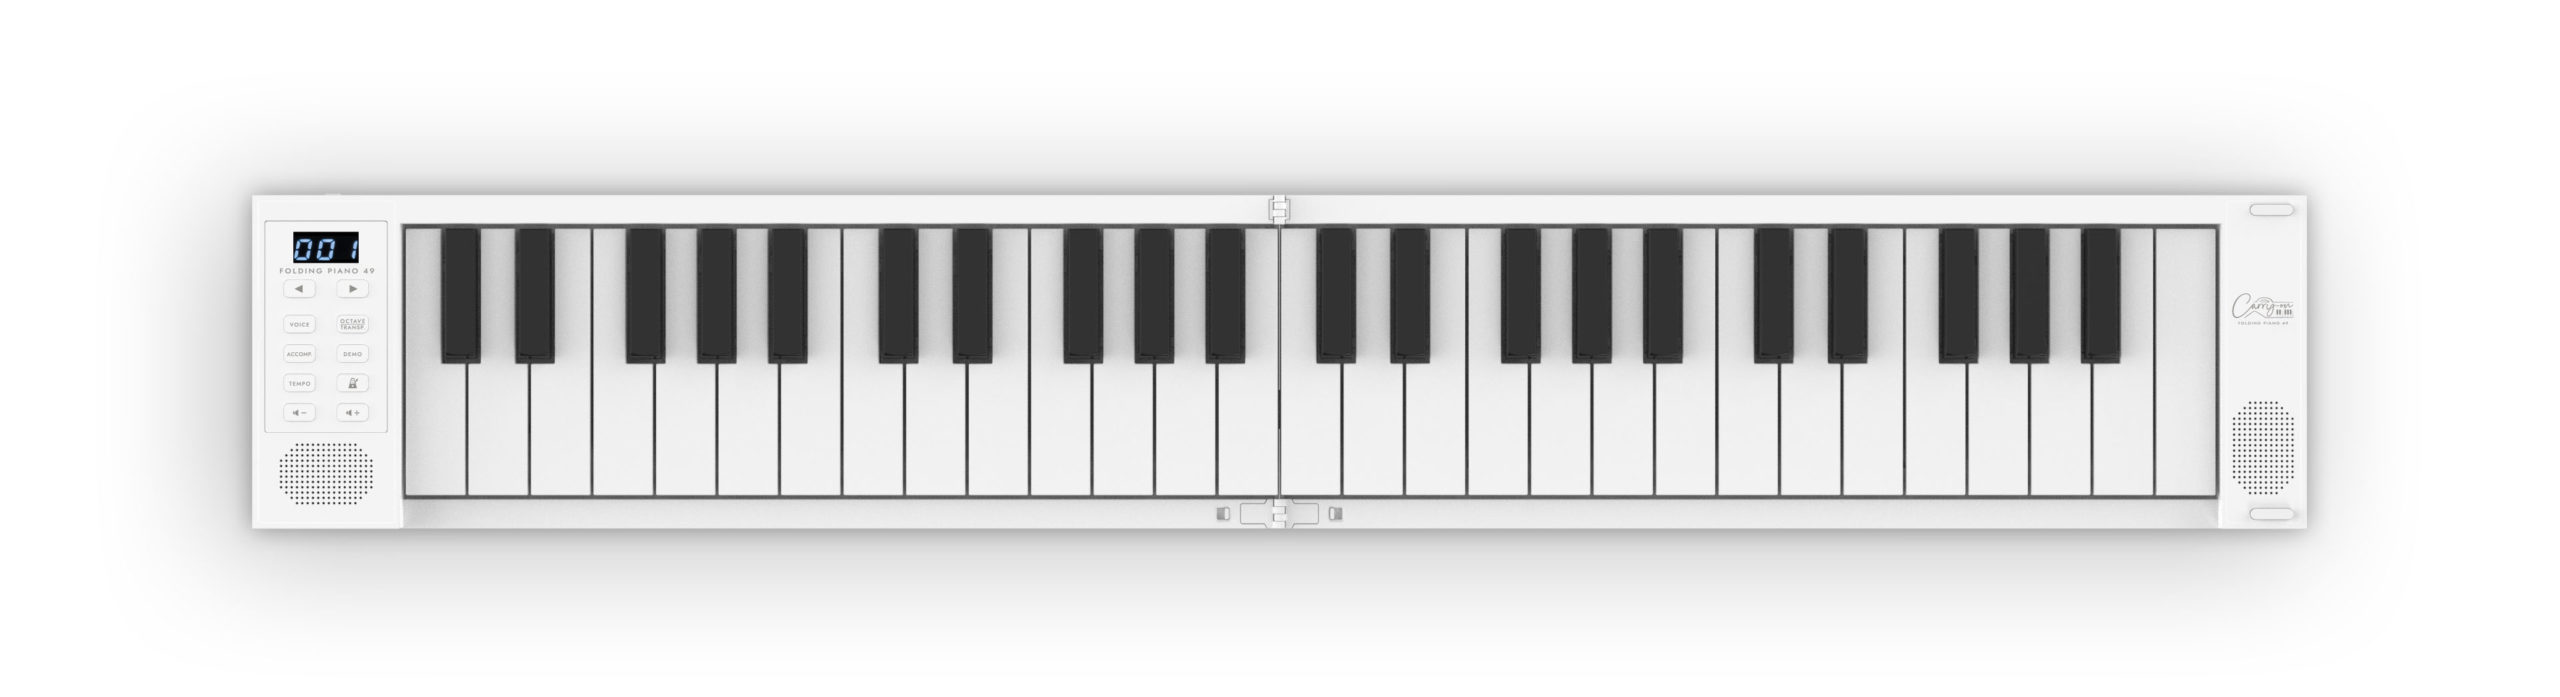 Korg Carry On 88 Key Folding Piano - 845644006489